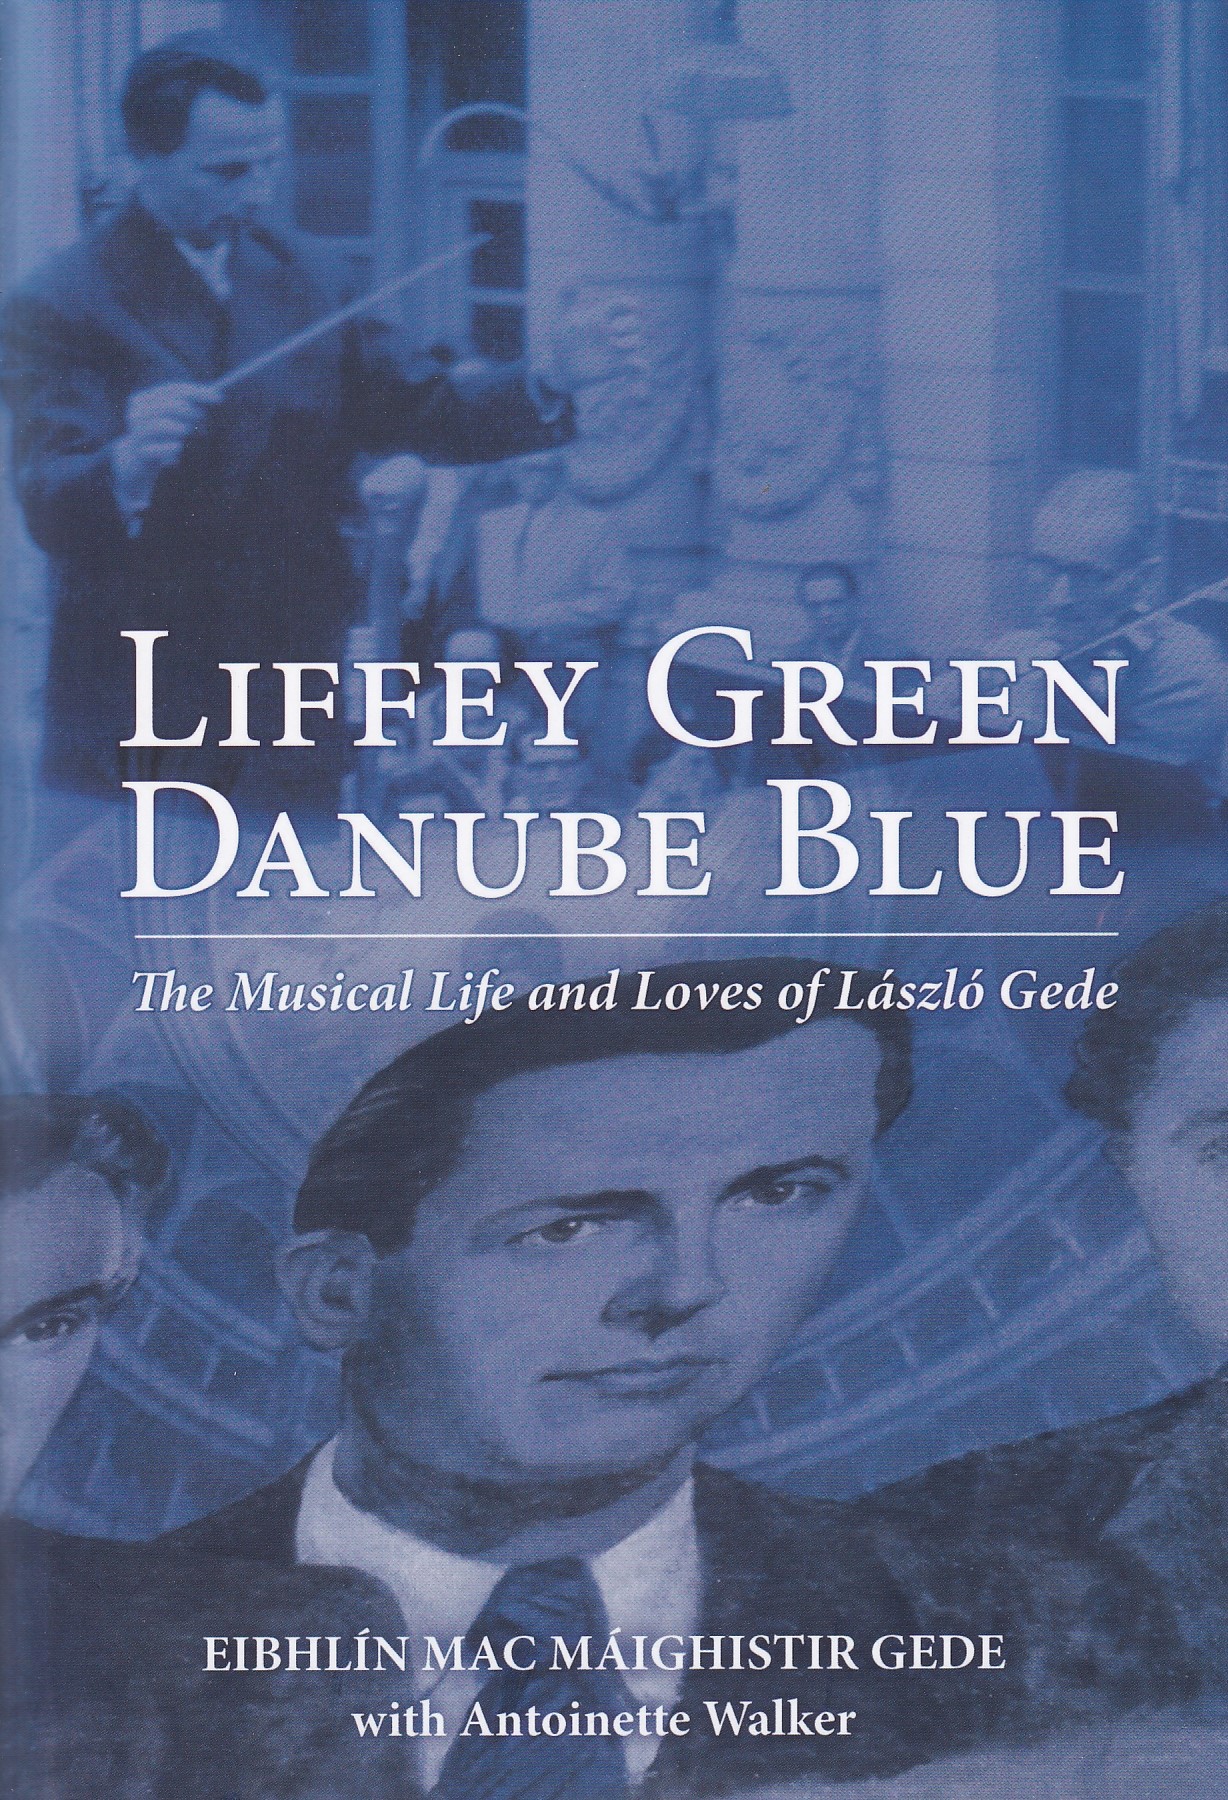 Liffey Green Danube Blue: The Musical Life and Loves of László Gede | Eibhlín Mac Máighistir Gede with Antoinette Walker | Charlie Byrne's